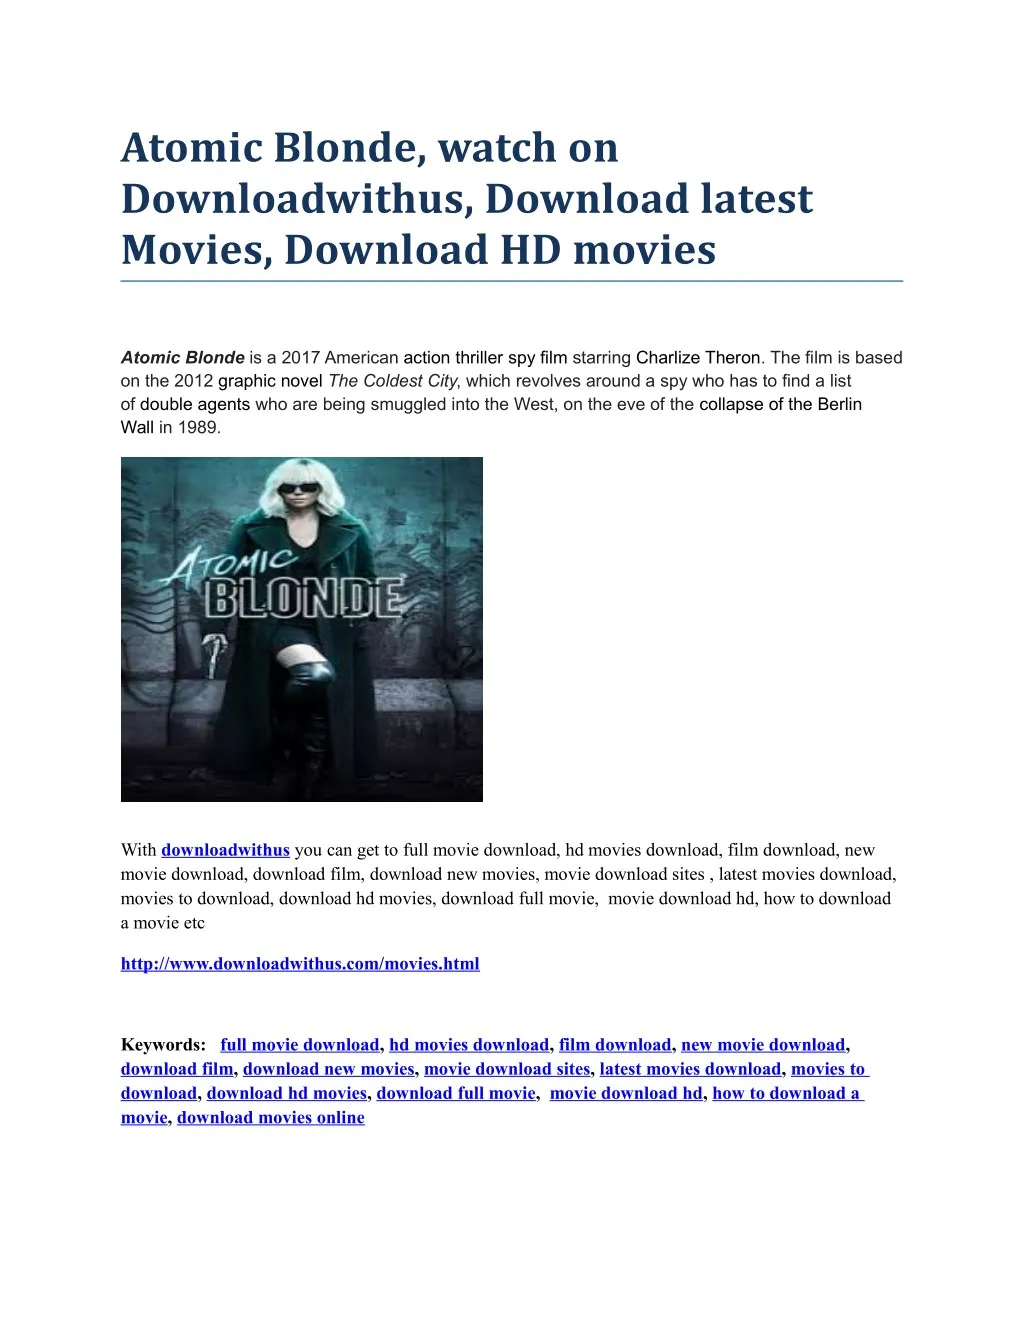 atomic blonde watch on downloadwithus download n.